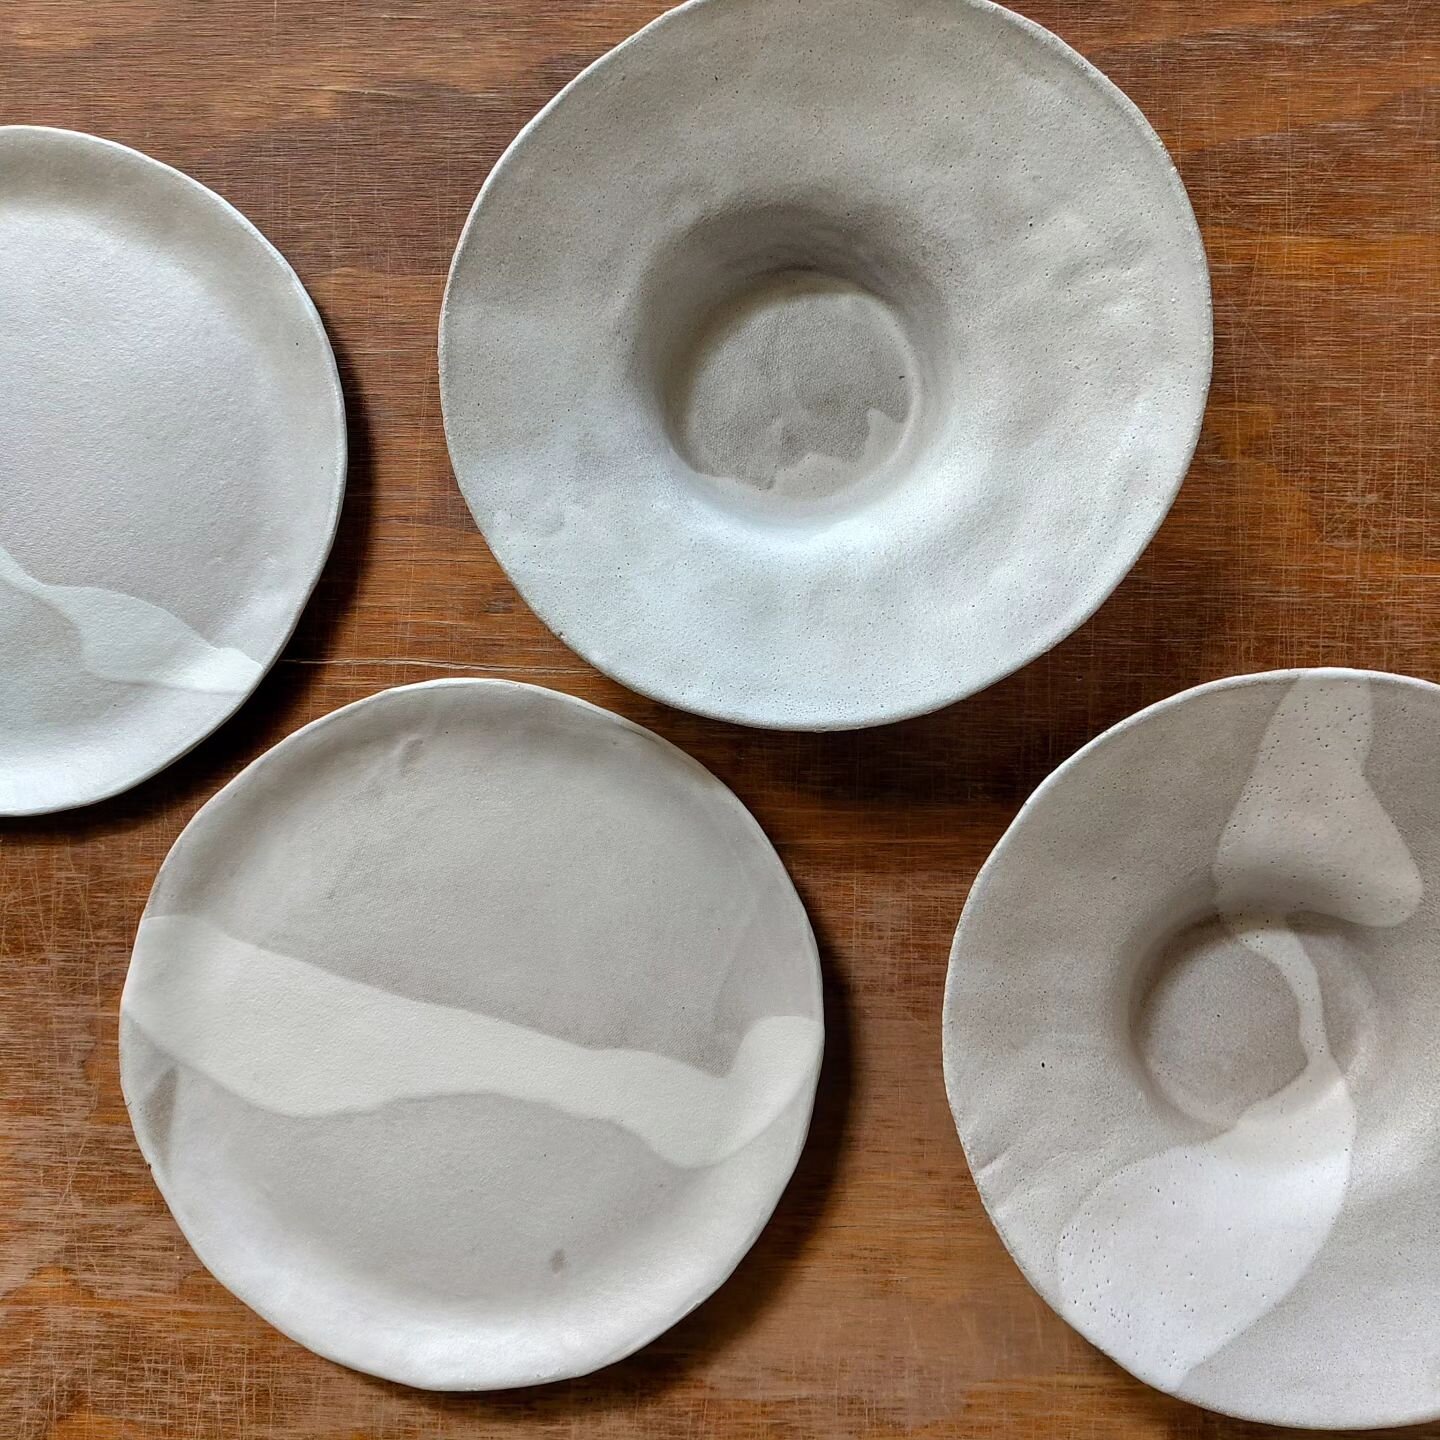 New pieces in production for @akokorestaurant.

#ceramics #moderntableware #tablewareforreataurant #akokorestaurant #michelinstarrestaurant #ceramica #modernrustic #stonewareplates